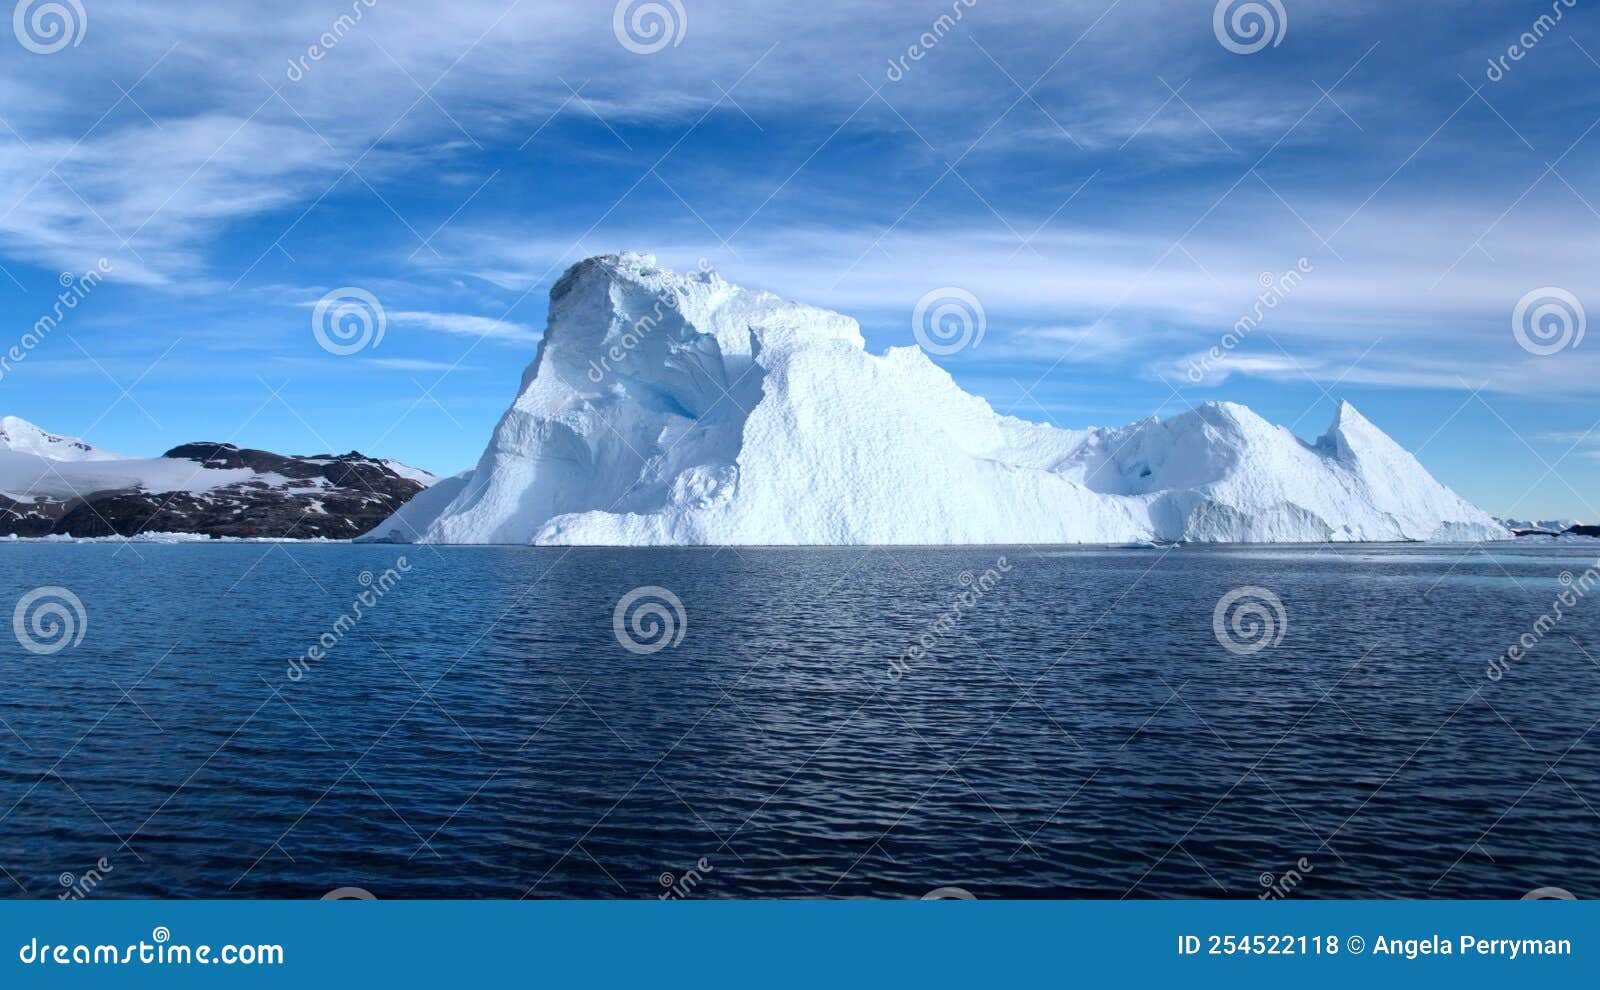 iceberg floating in cierva cove, antarctica